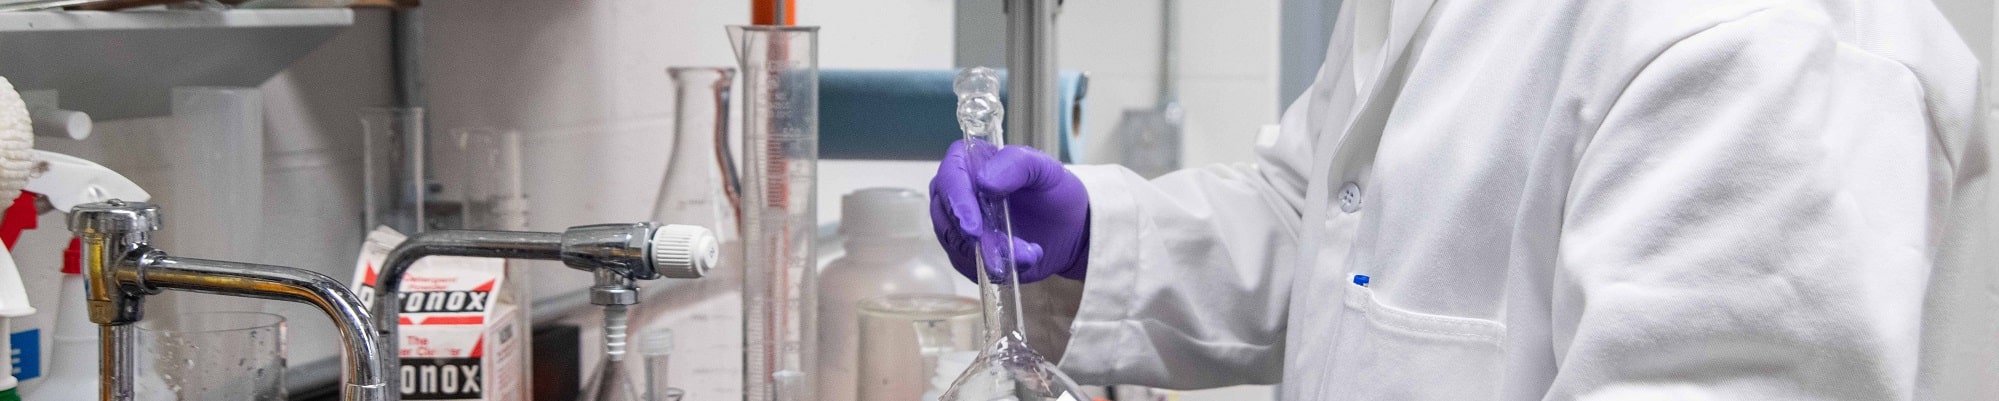 Chemist cleaning glassware